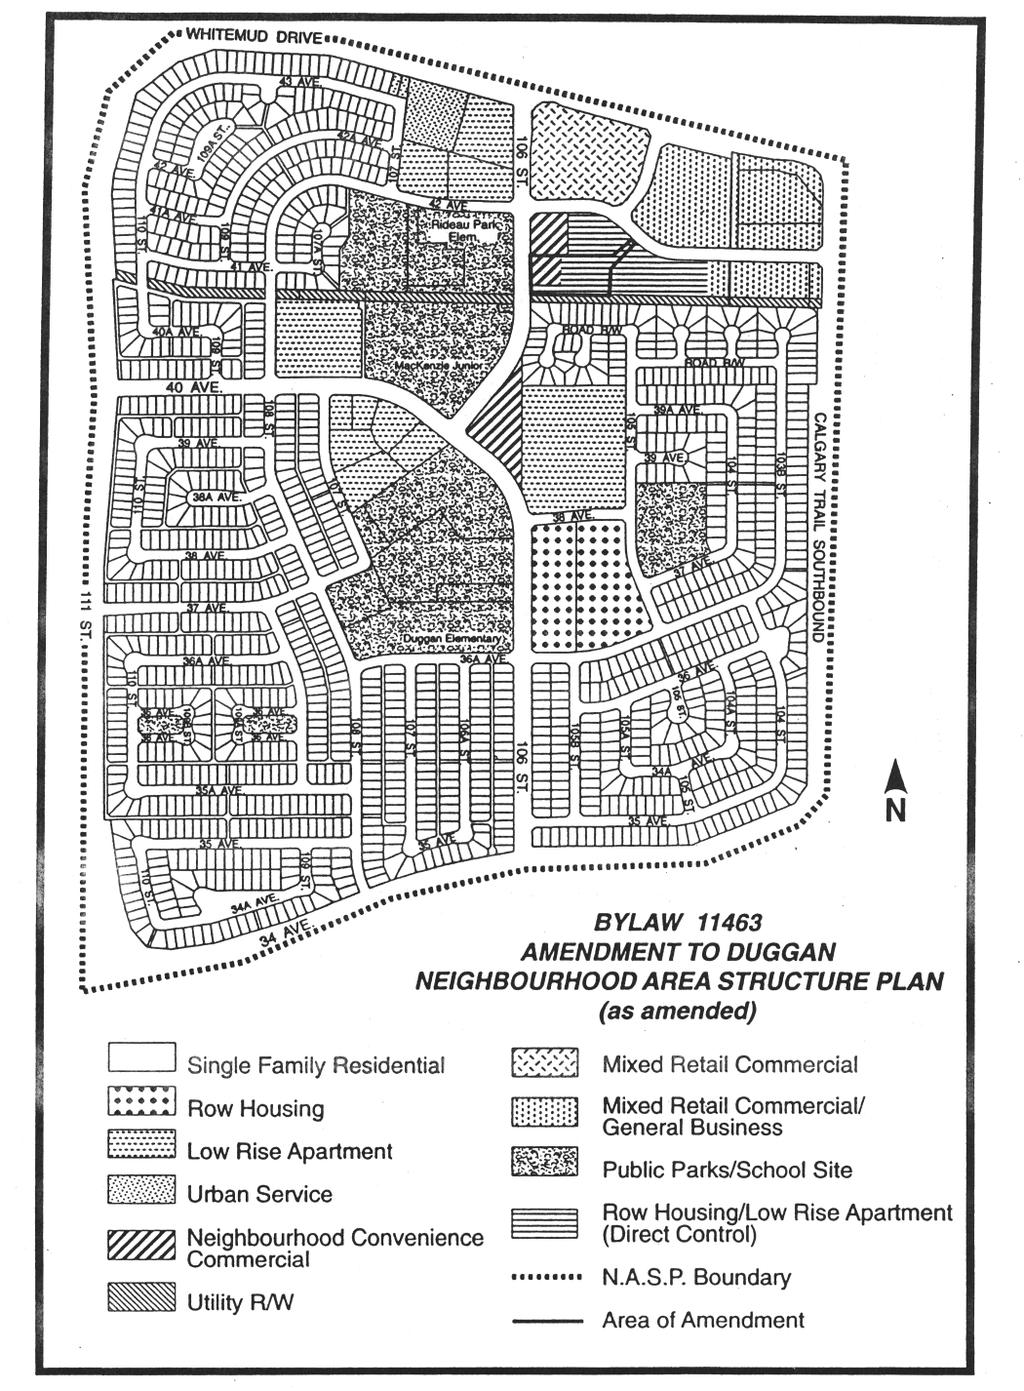 Duggan Neighbourhood Area Structure Plan (Bylaw 11463,